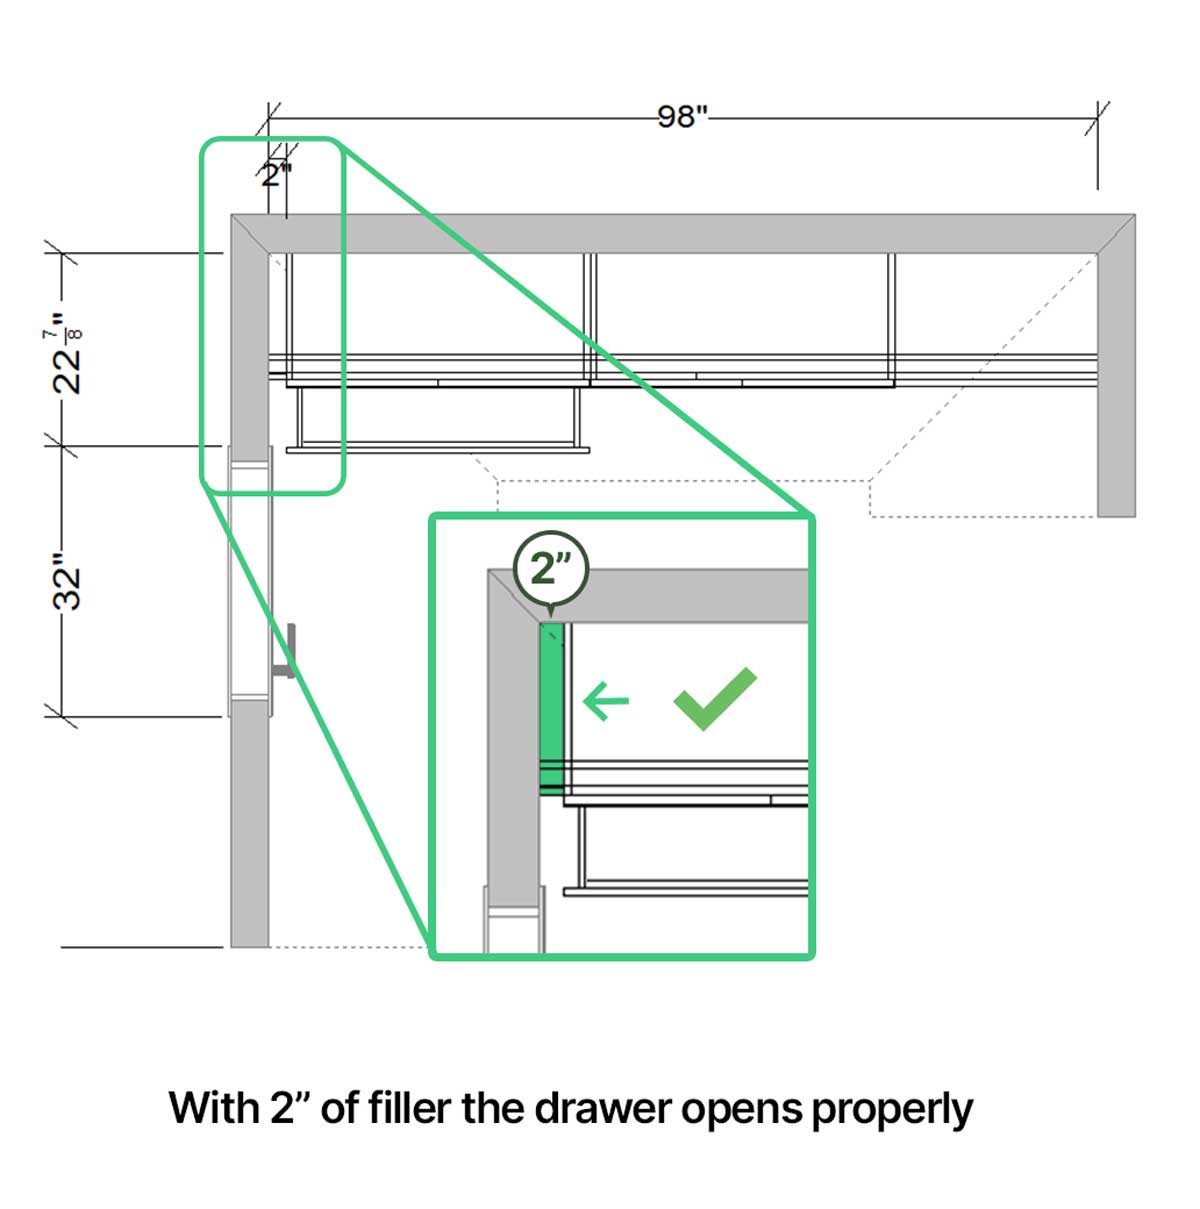 IKEA mudroom design with filler